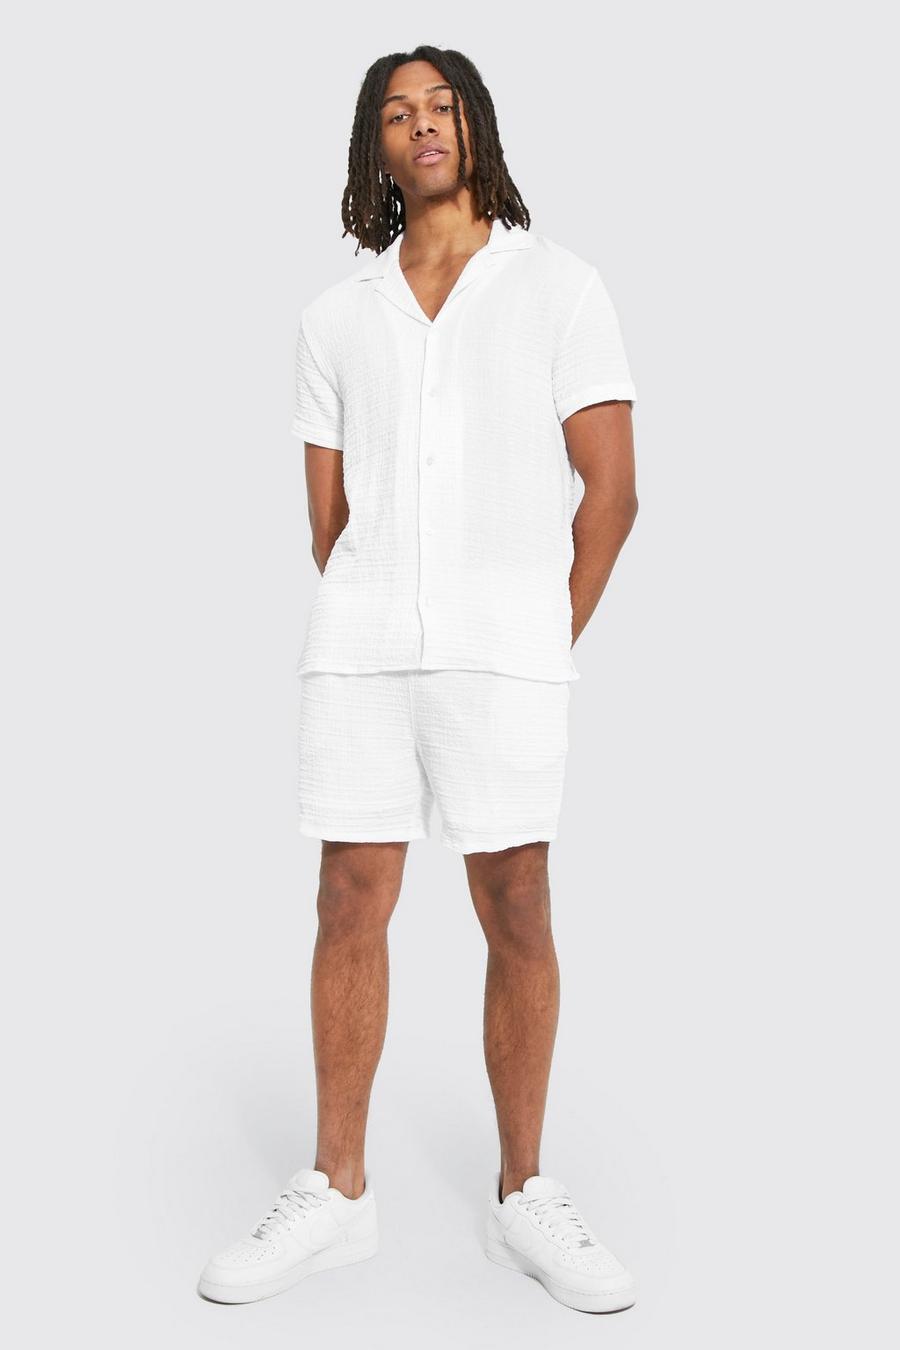 White Short Sleeve Textured Shirt And Short